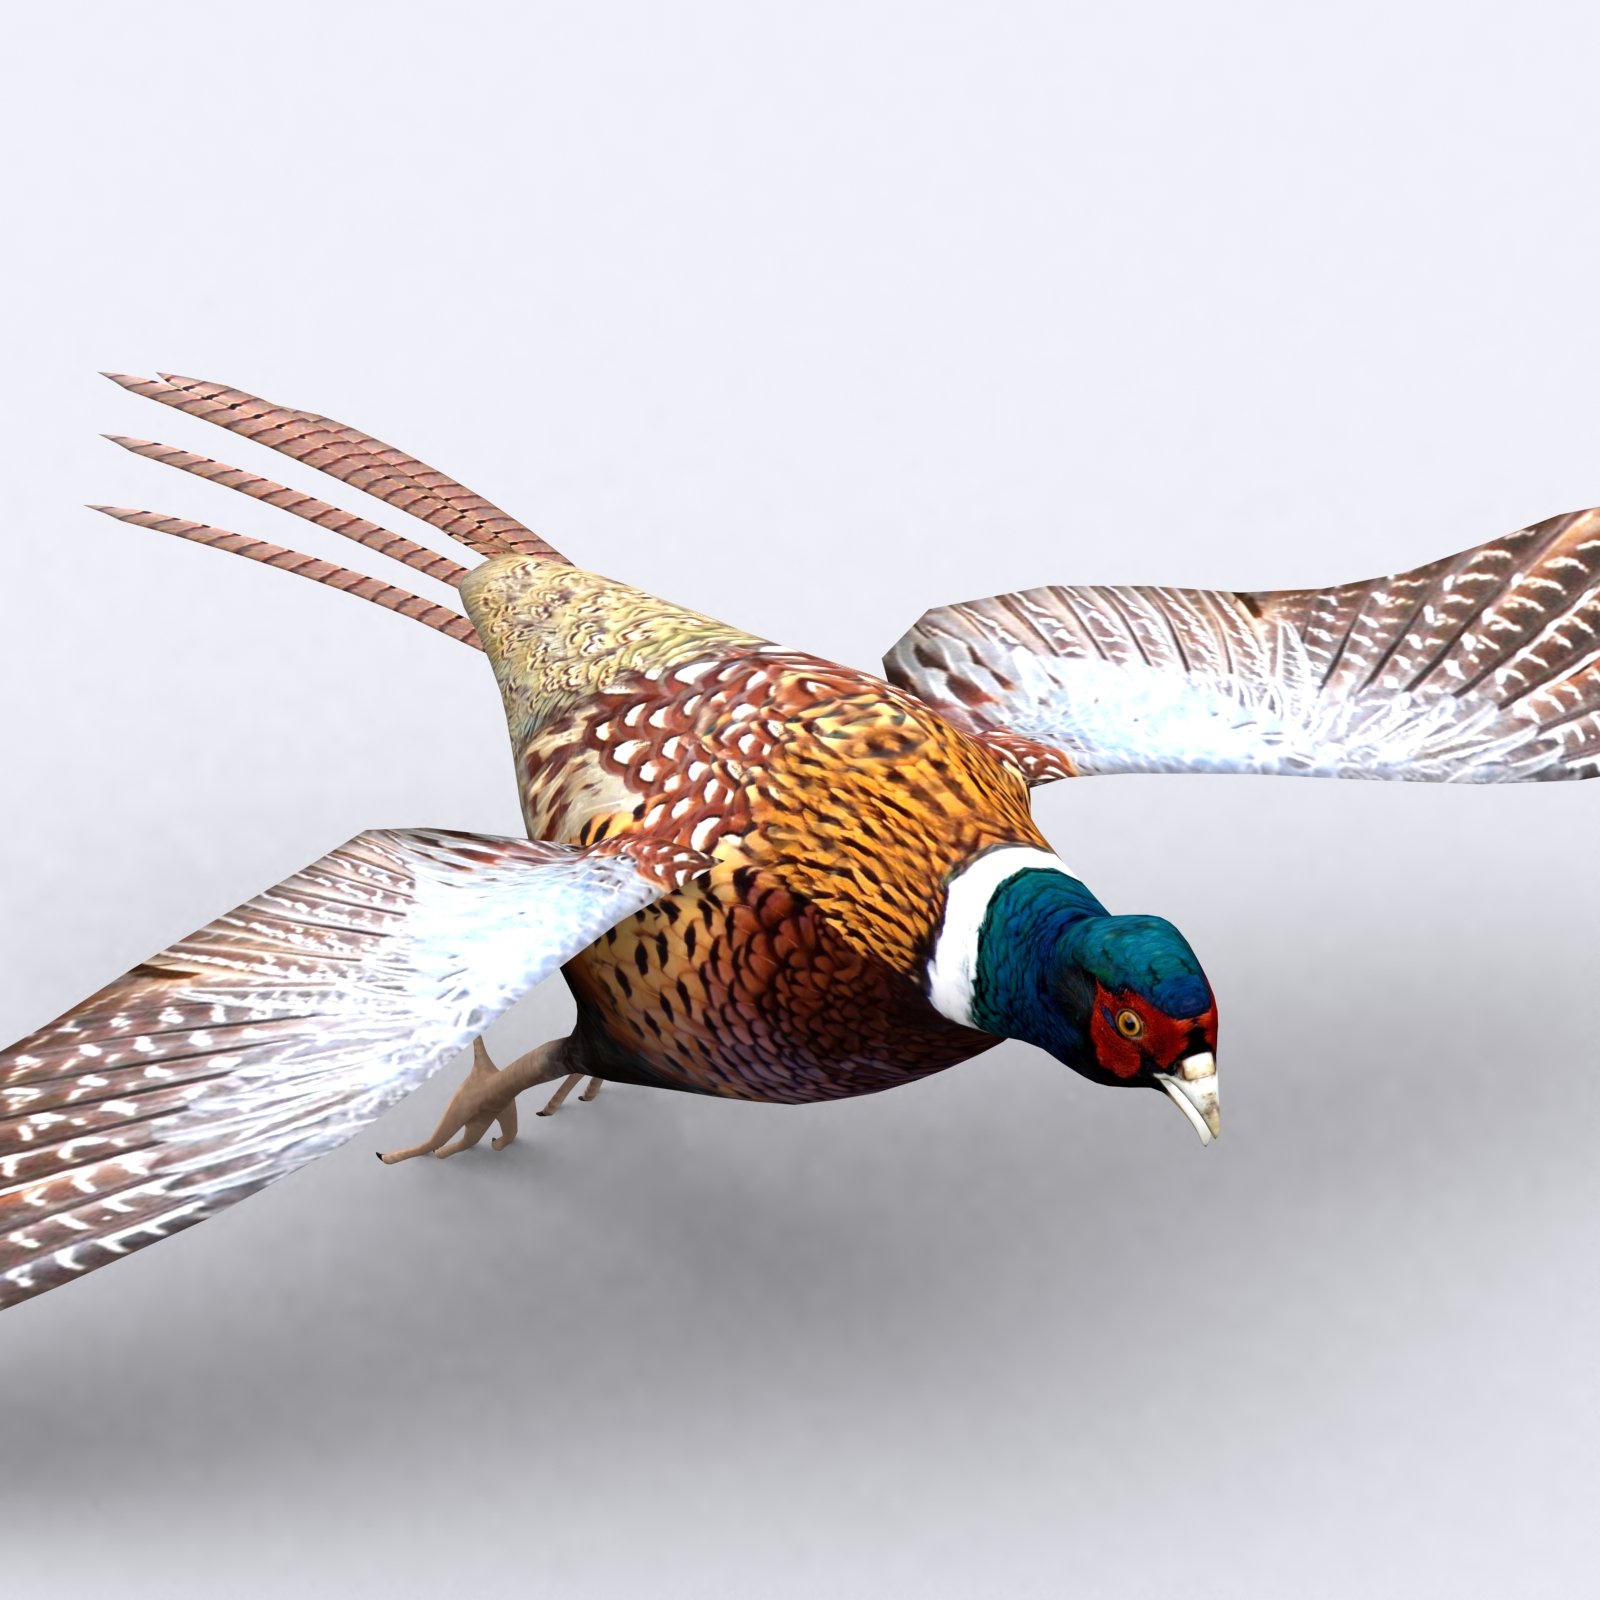 3DRT - Animals - Pheasant cover image.